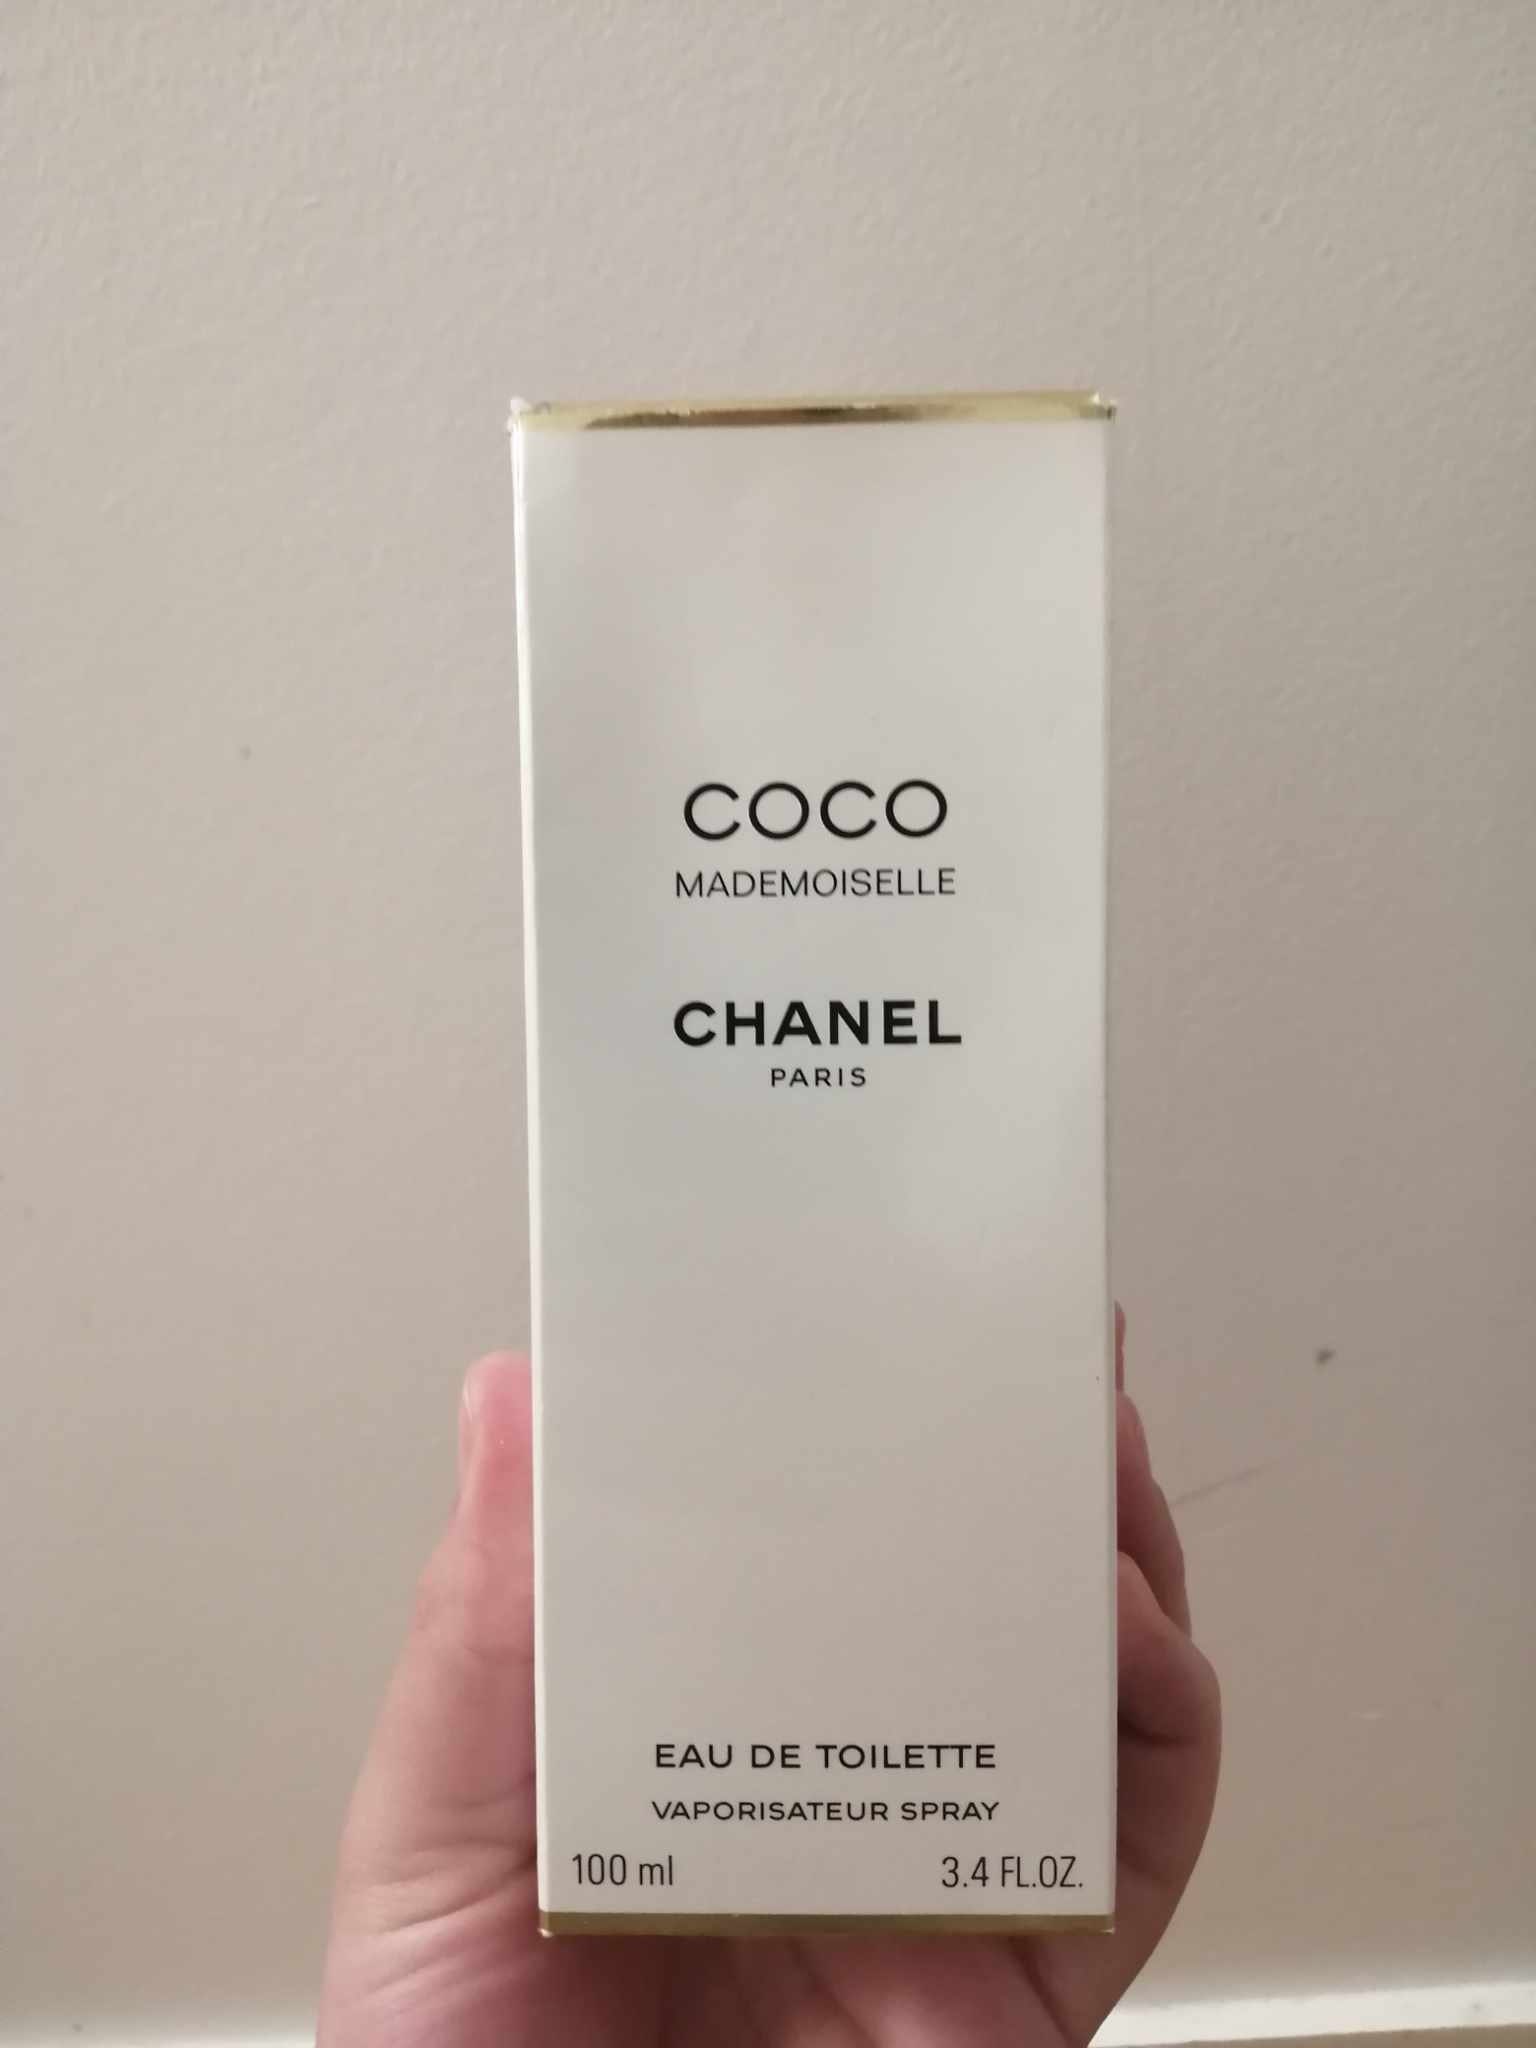 COCO MADEMOISELLE CHANEL parfum 1.5 ml. 0.05 fl.oz. Mini micro miniatura  perfume